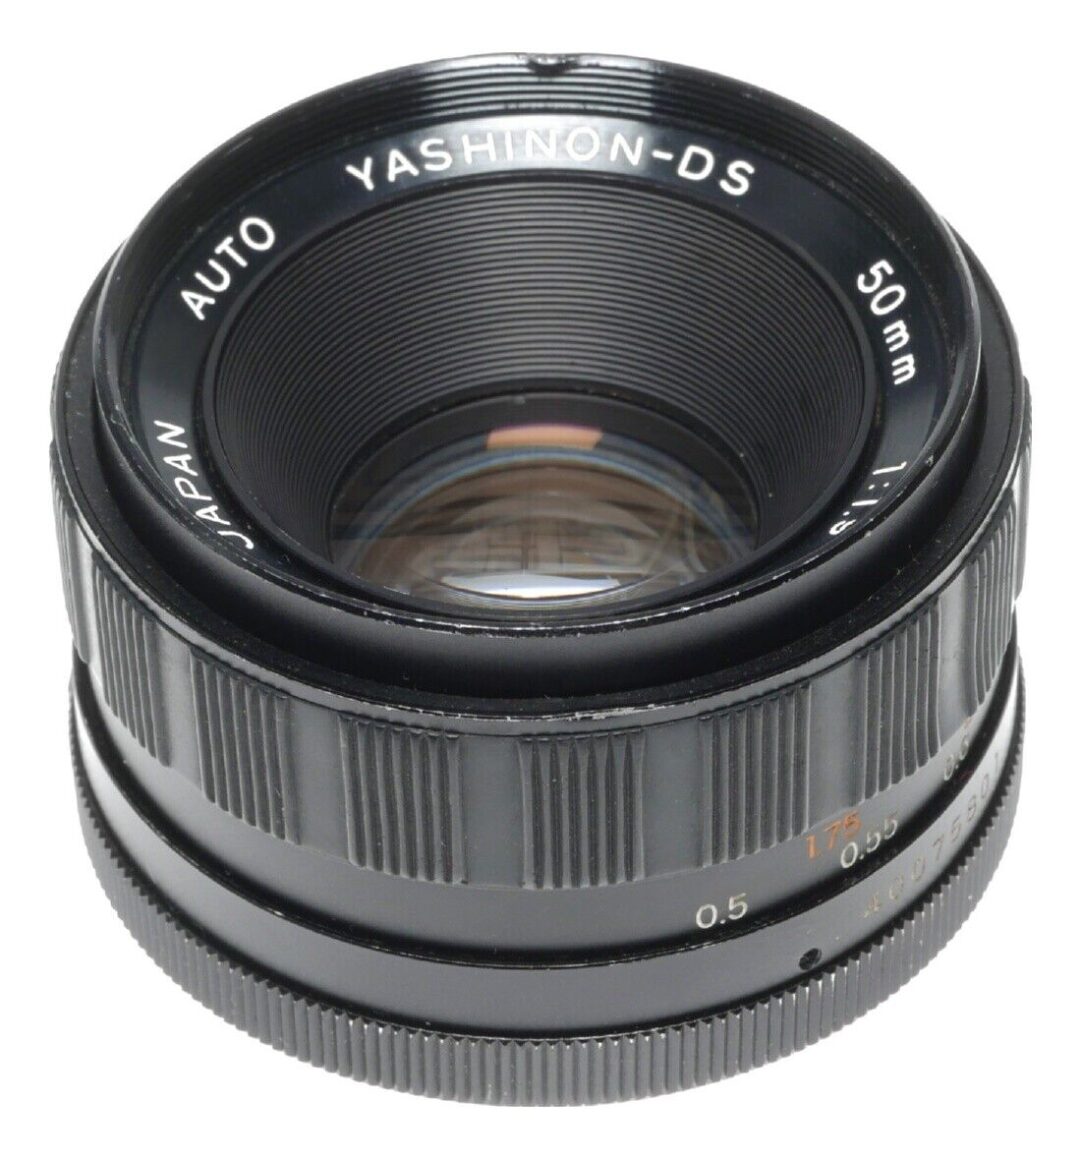 Yashica Auto YASHINON-DS 50mm F/1.9 | LENS-DB.COM